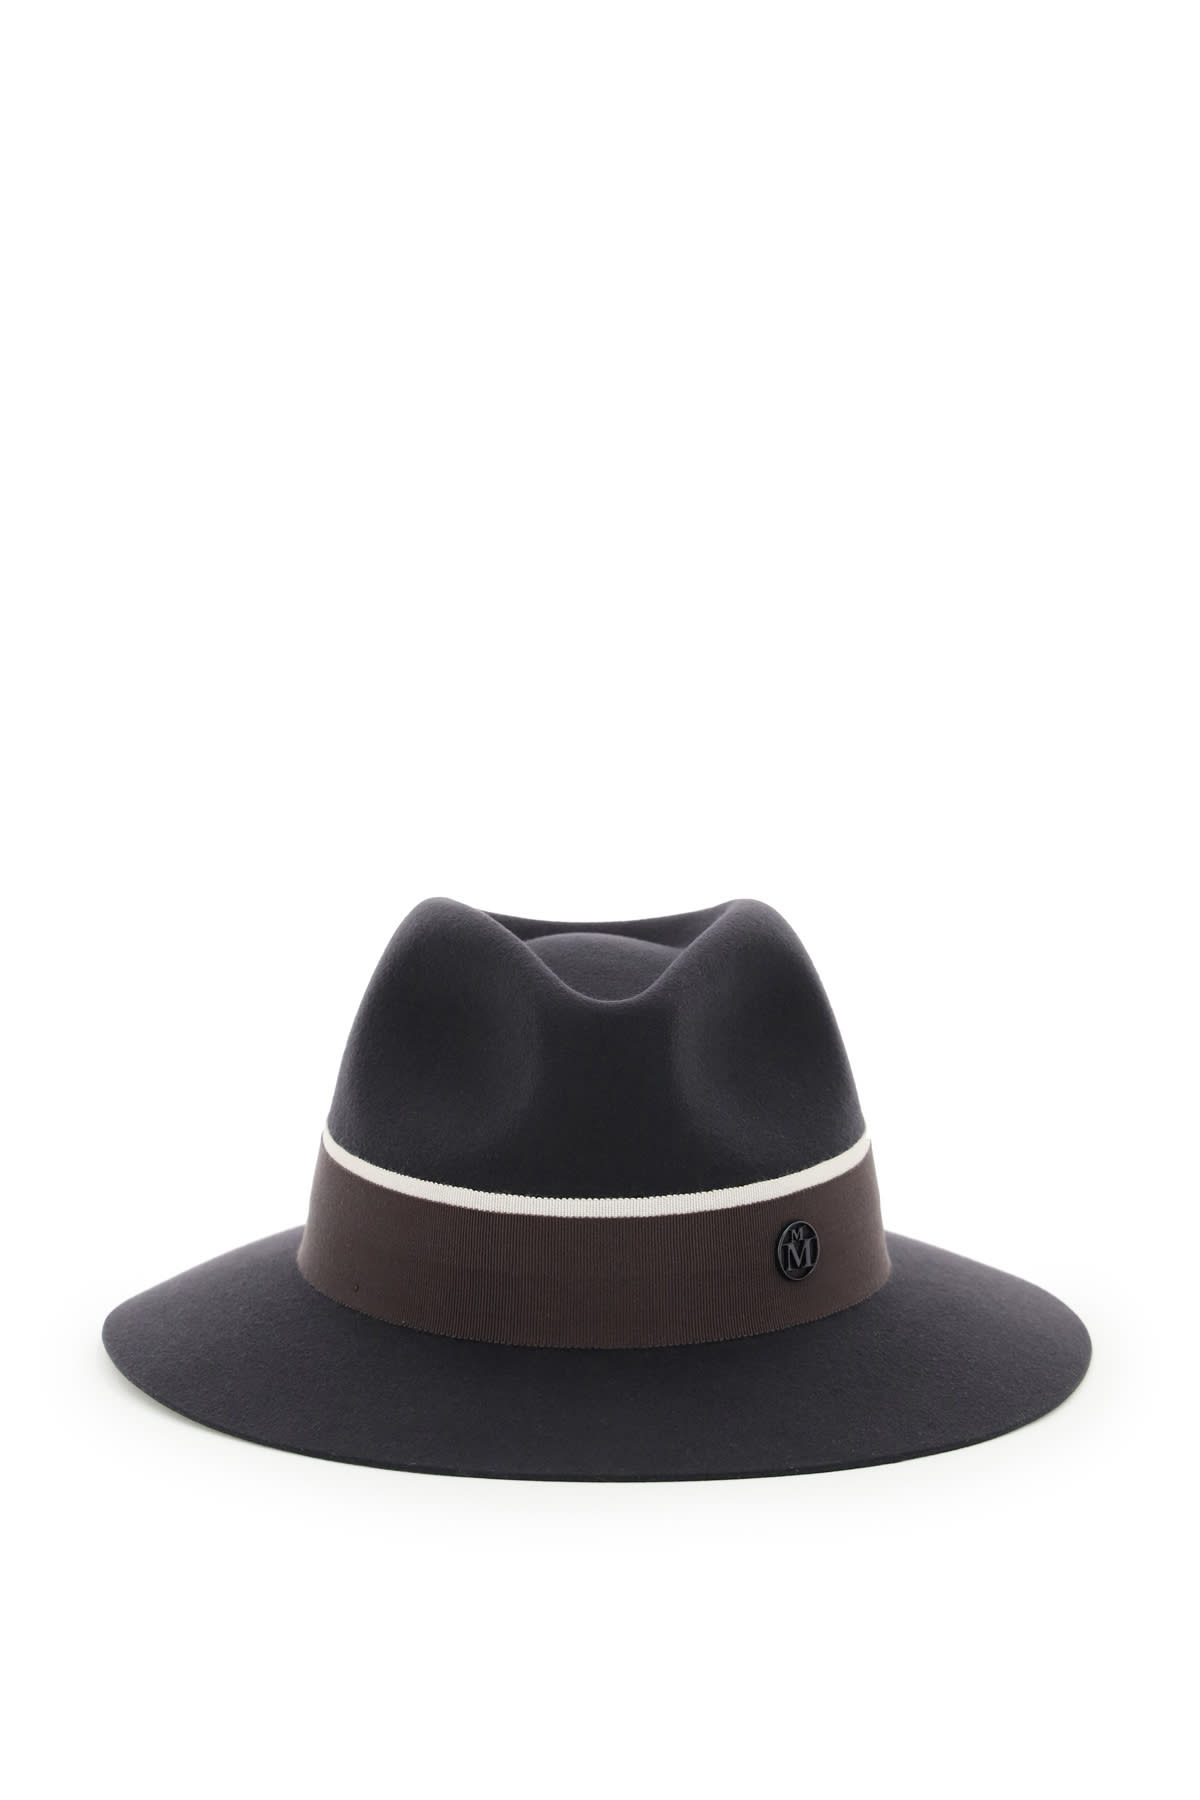 Maison Michel Rico Felt Fedora Hat